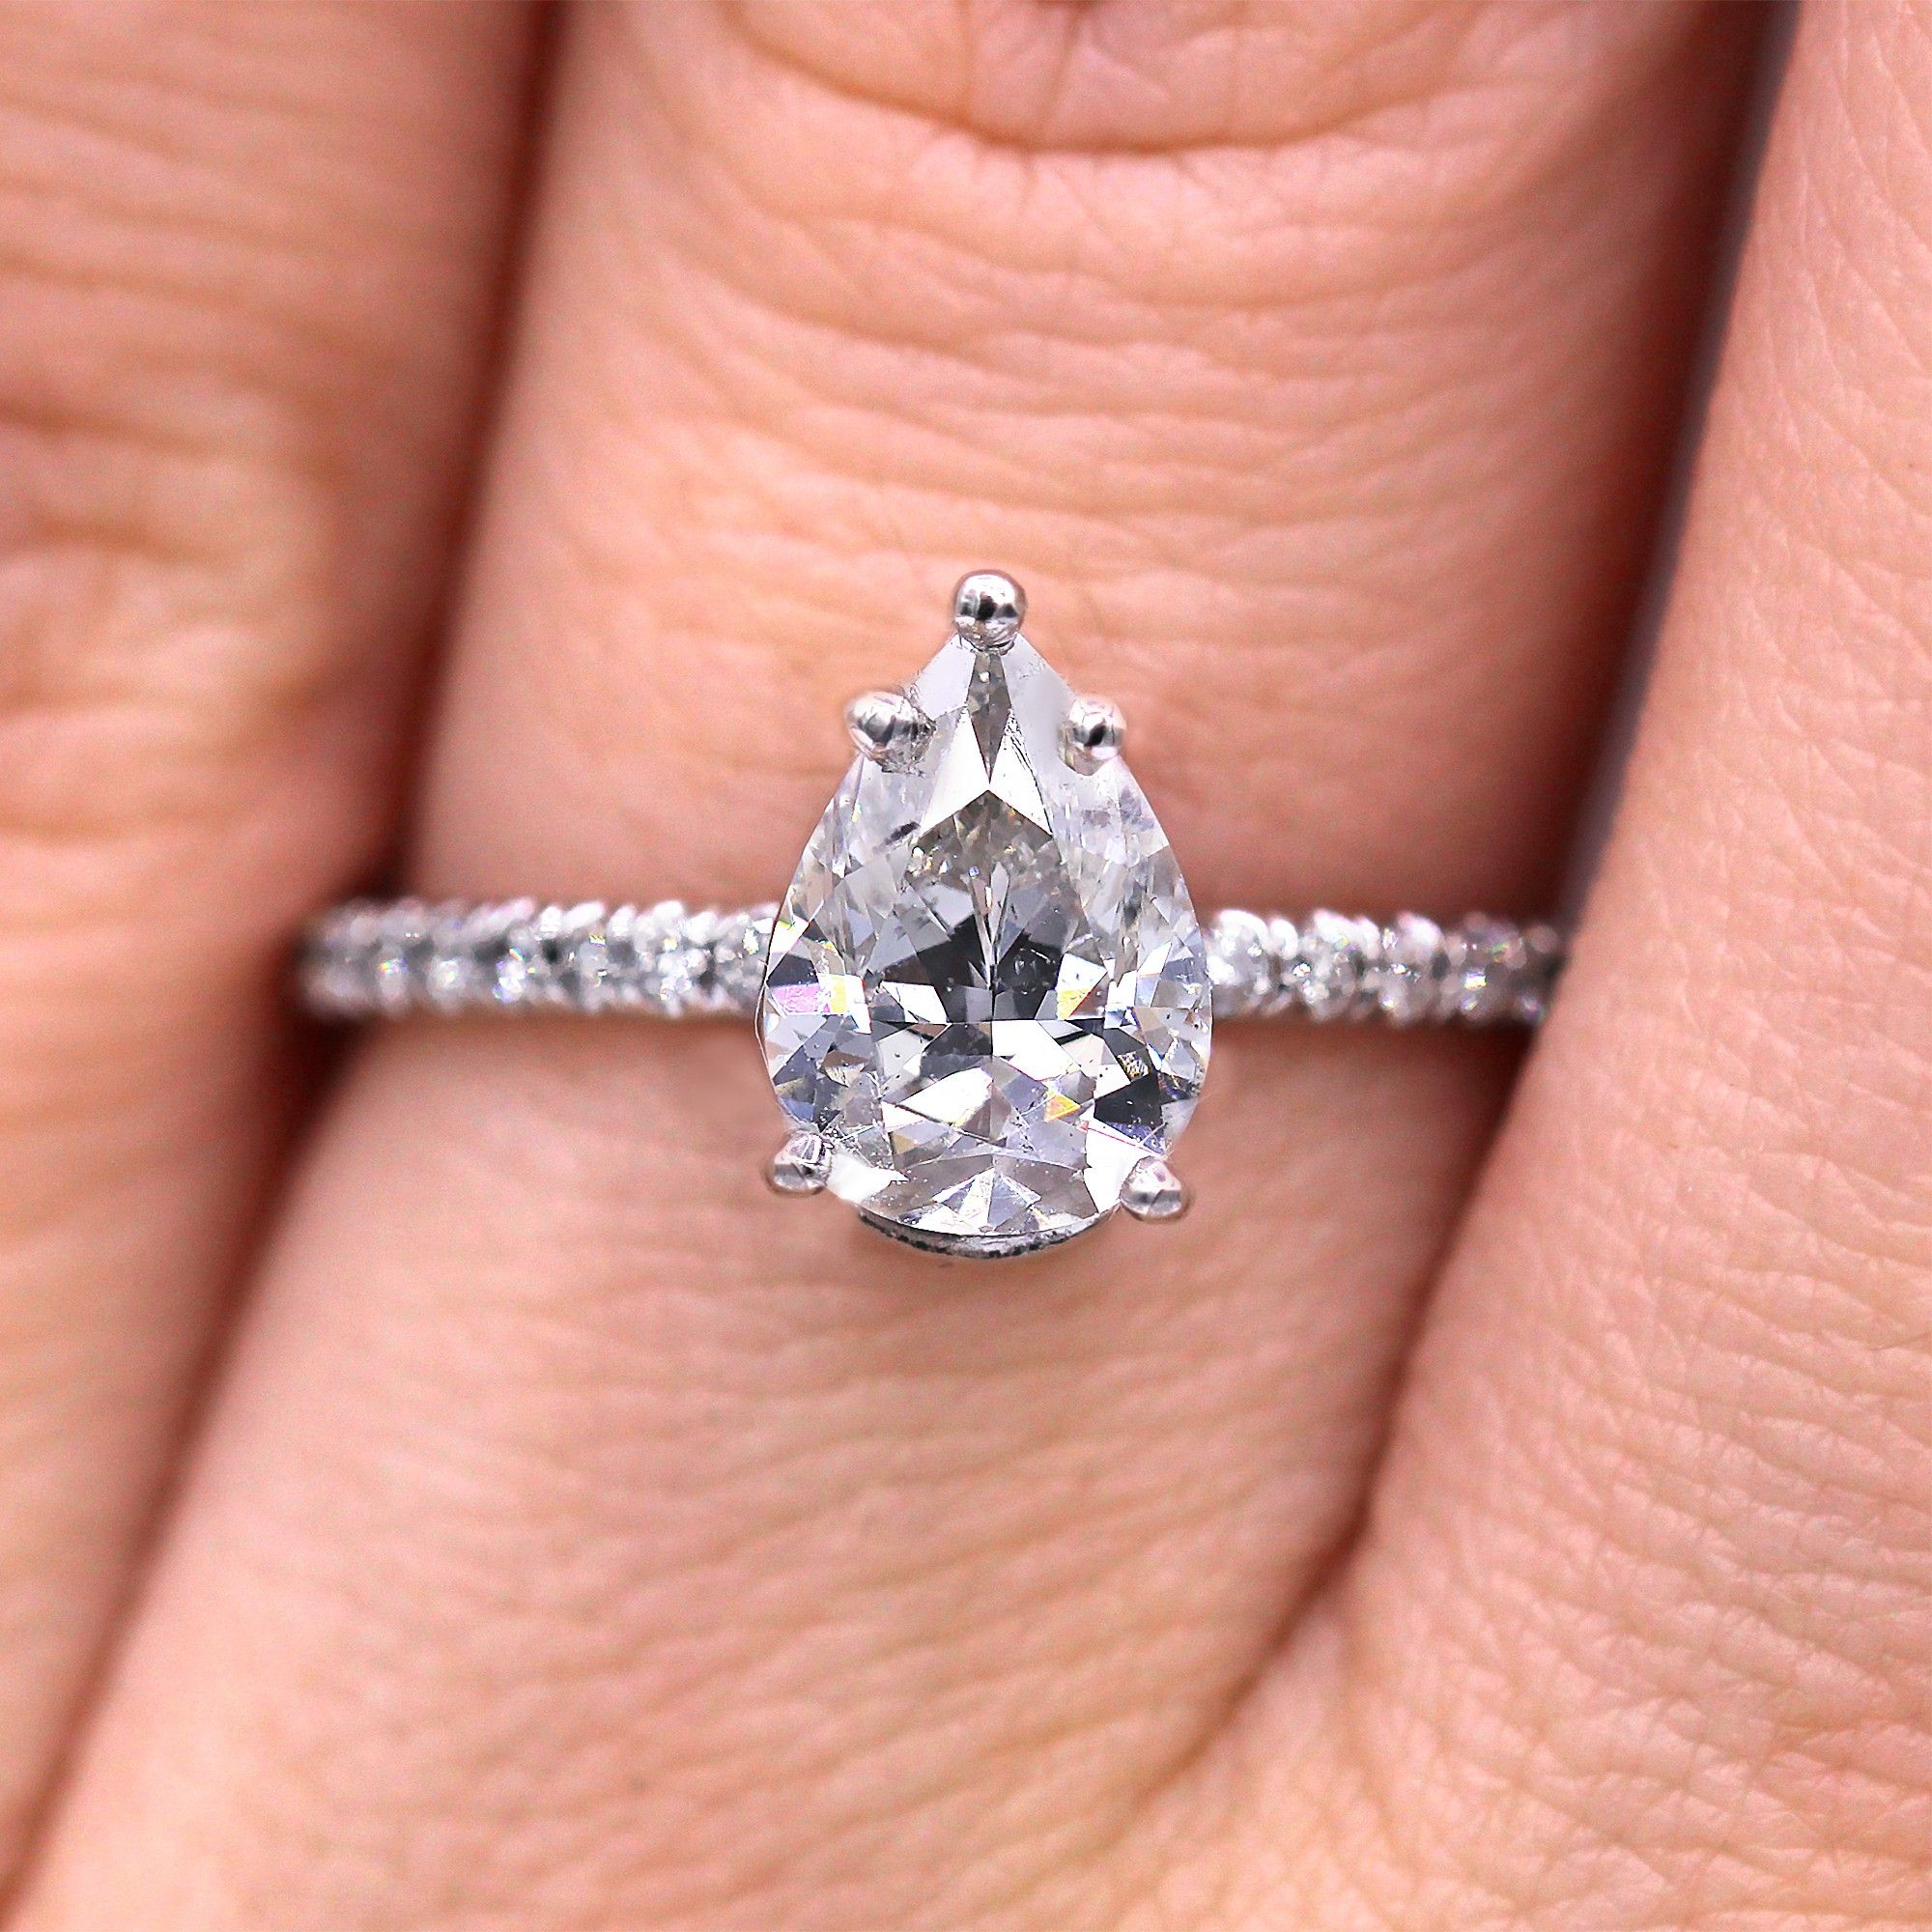 Petite And Elegant Pear Cut Diamond Ring For Petite Pear Shape Diamond Rings (View 24 of 25)